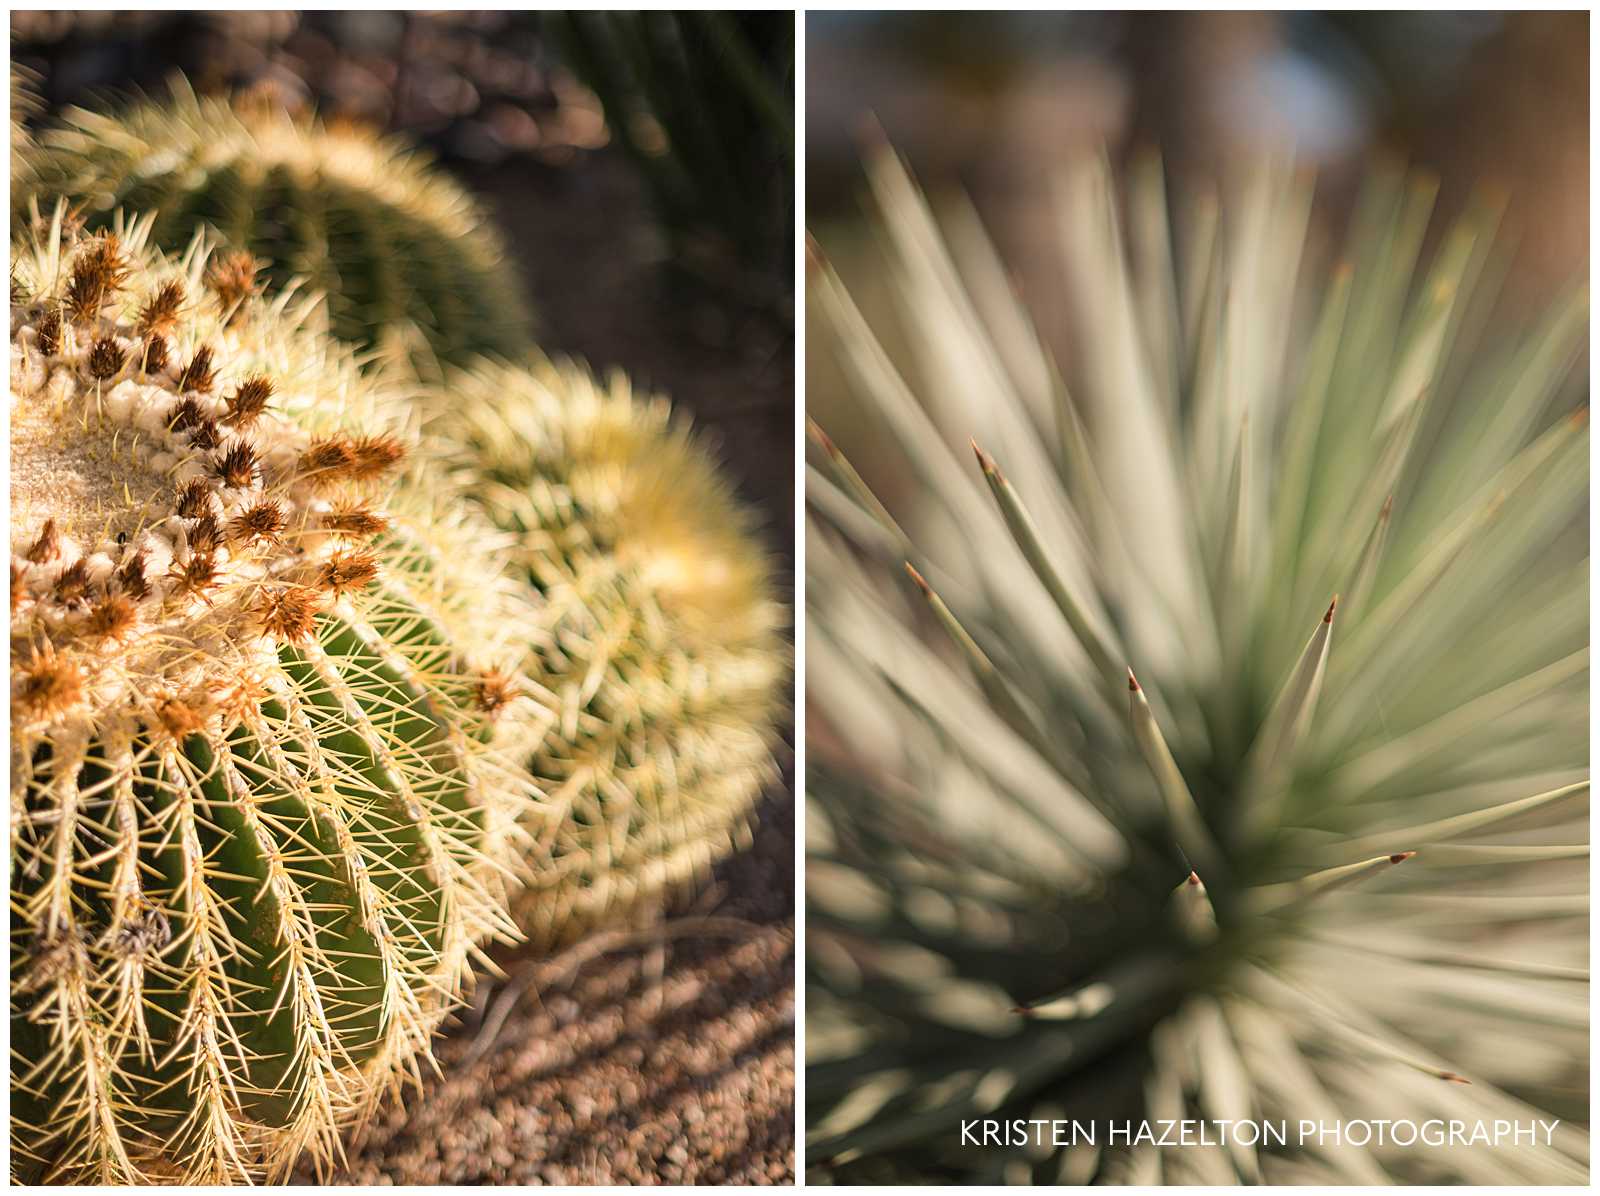 Barrel cactus and yucca